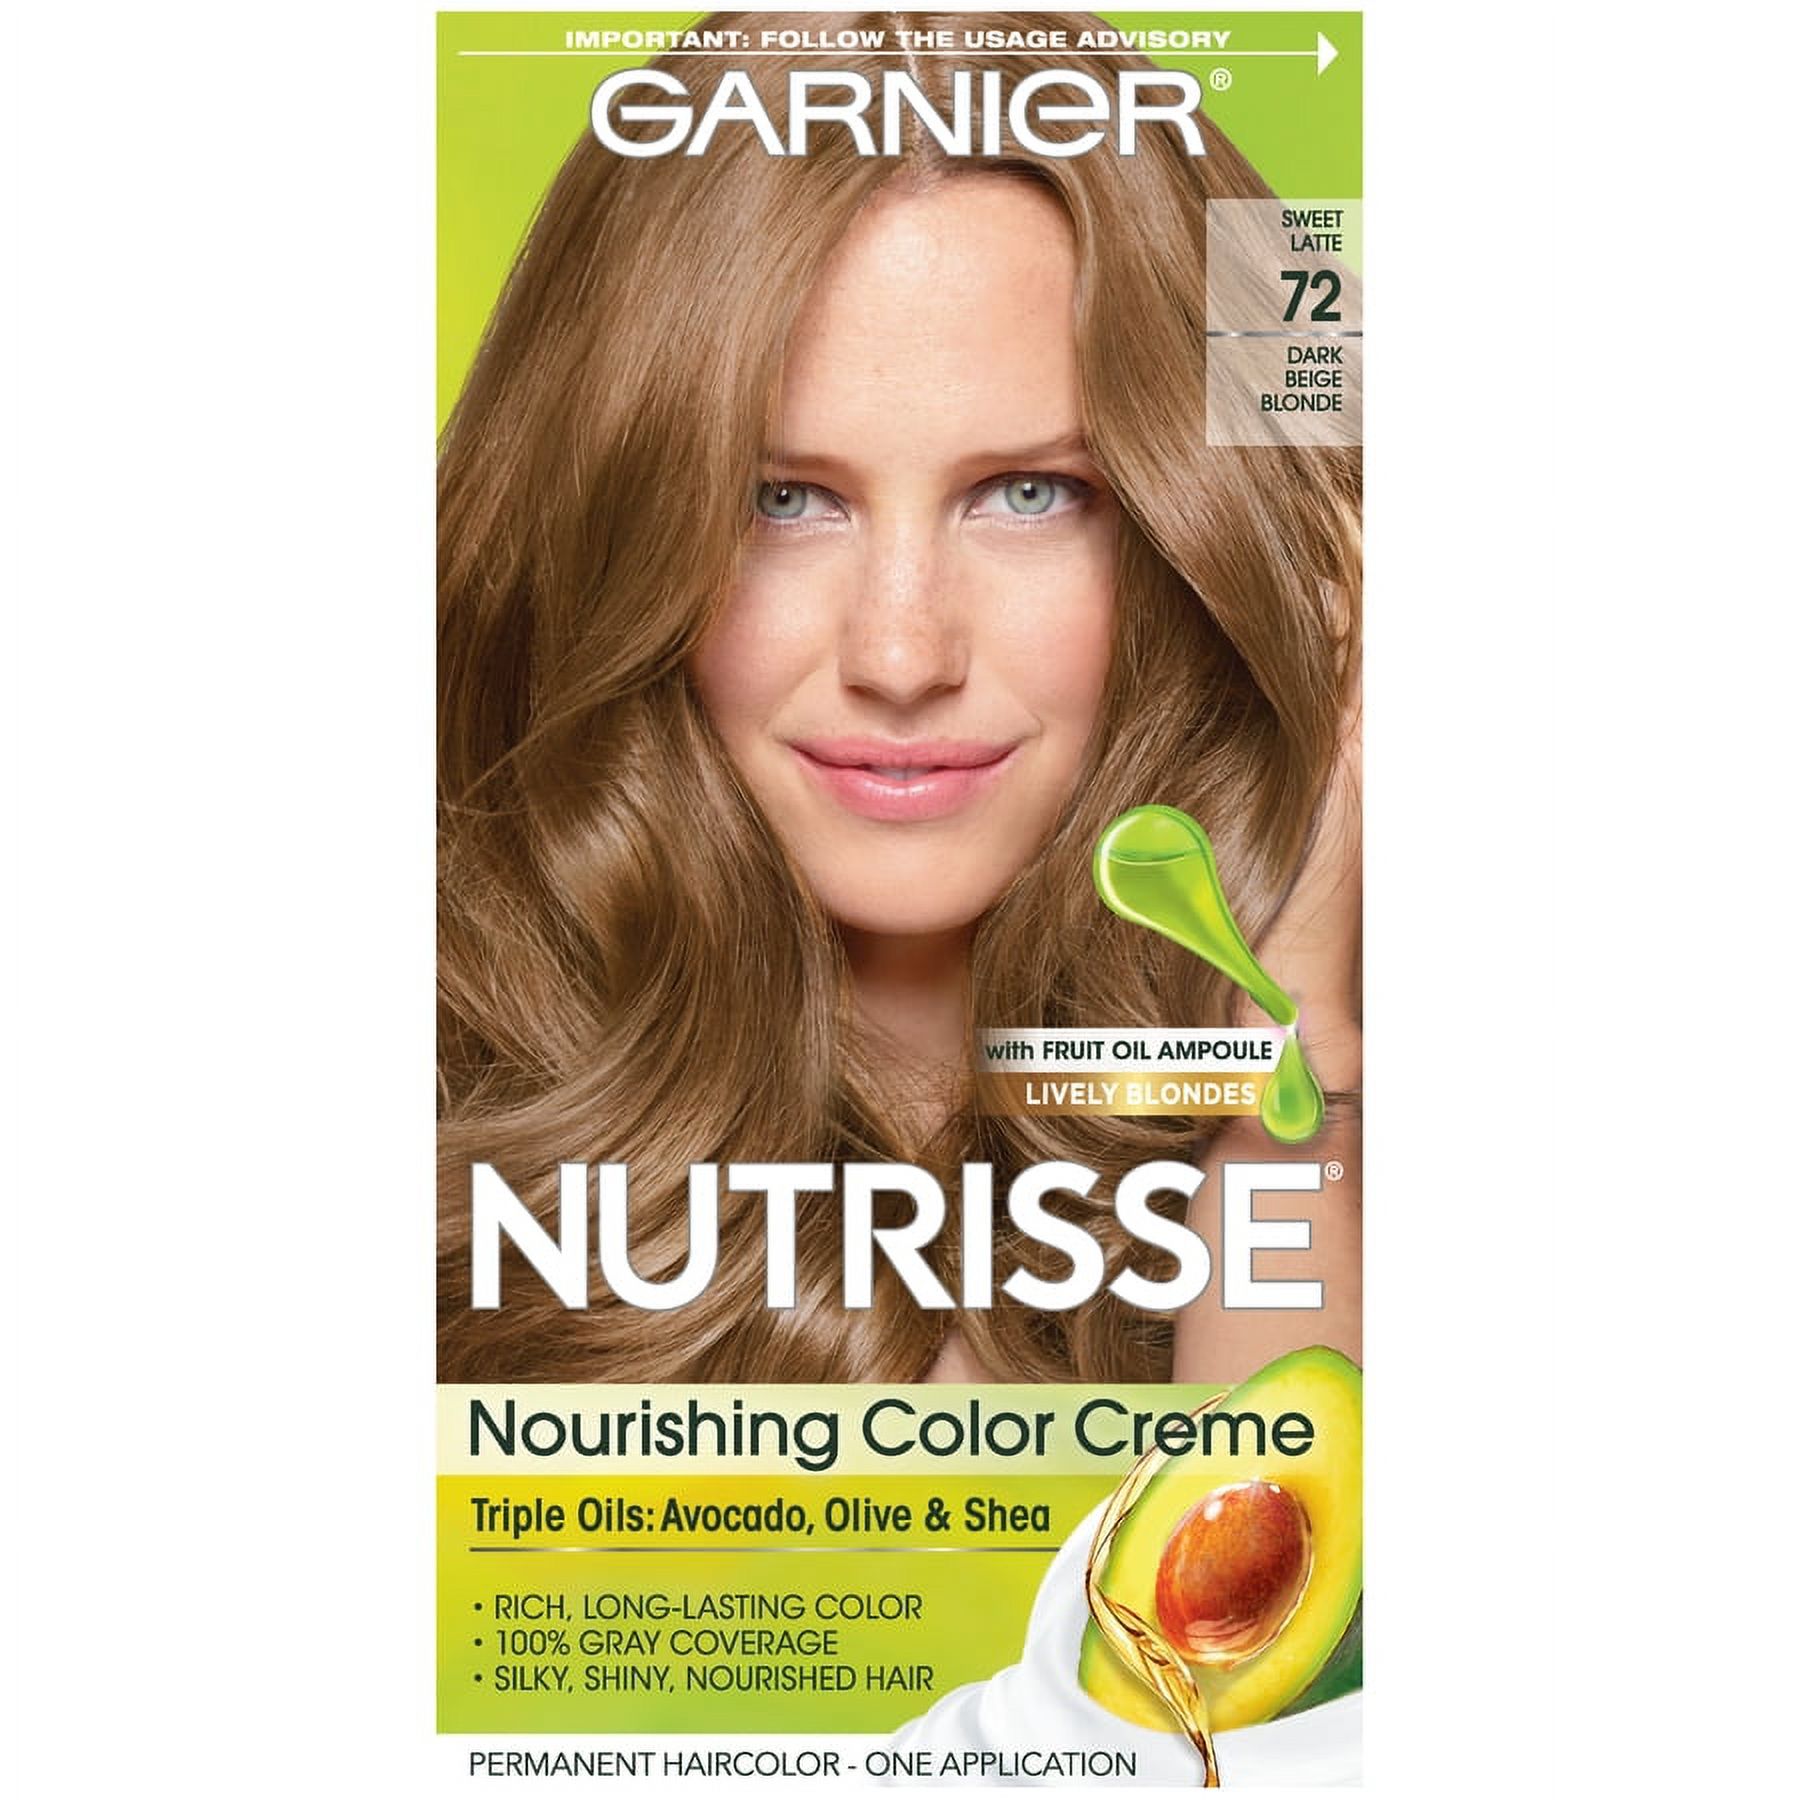 Garnier Nutrisse Nourishing Hair Color Creme, 072 Dark Beige Blonde Sweet Latte - image 1 of 10